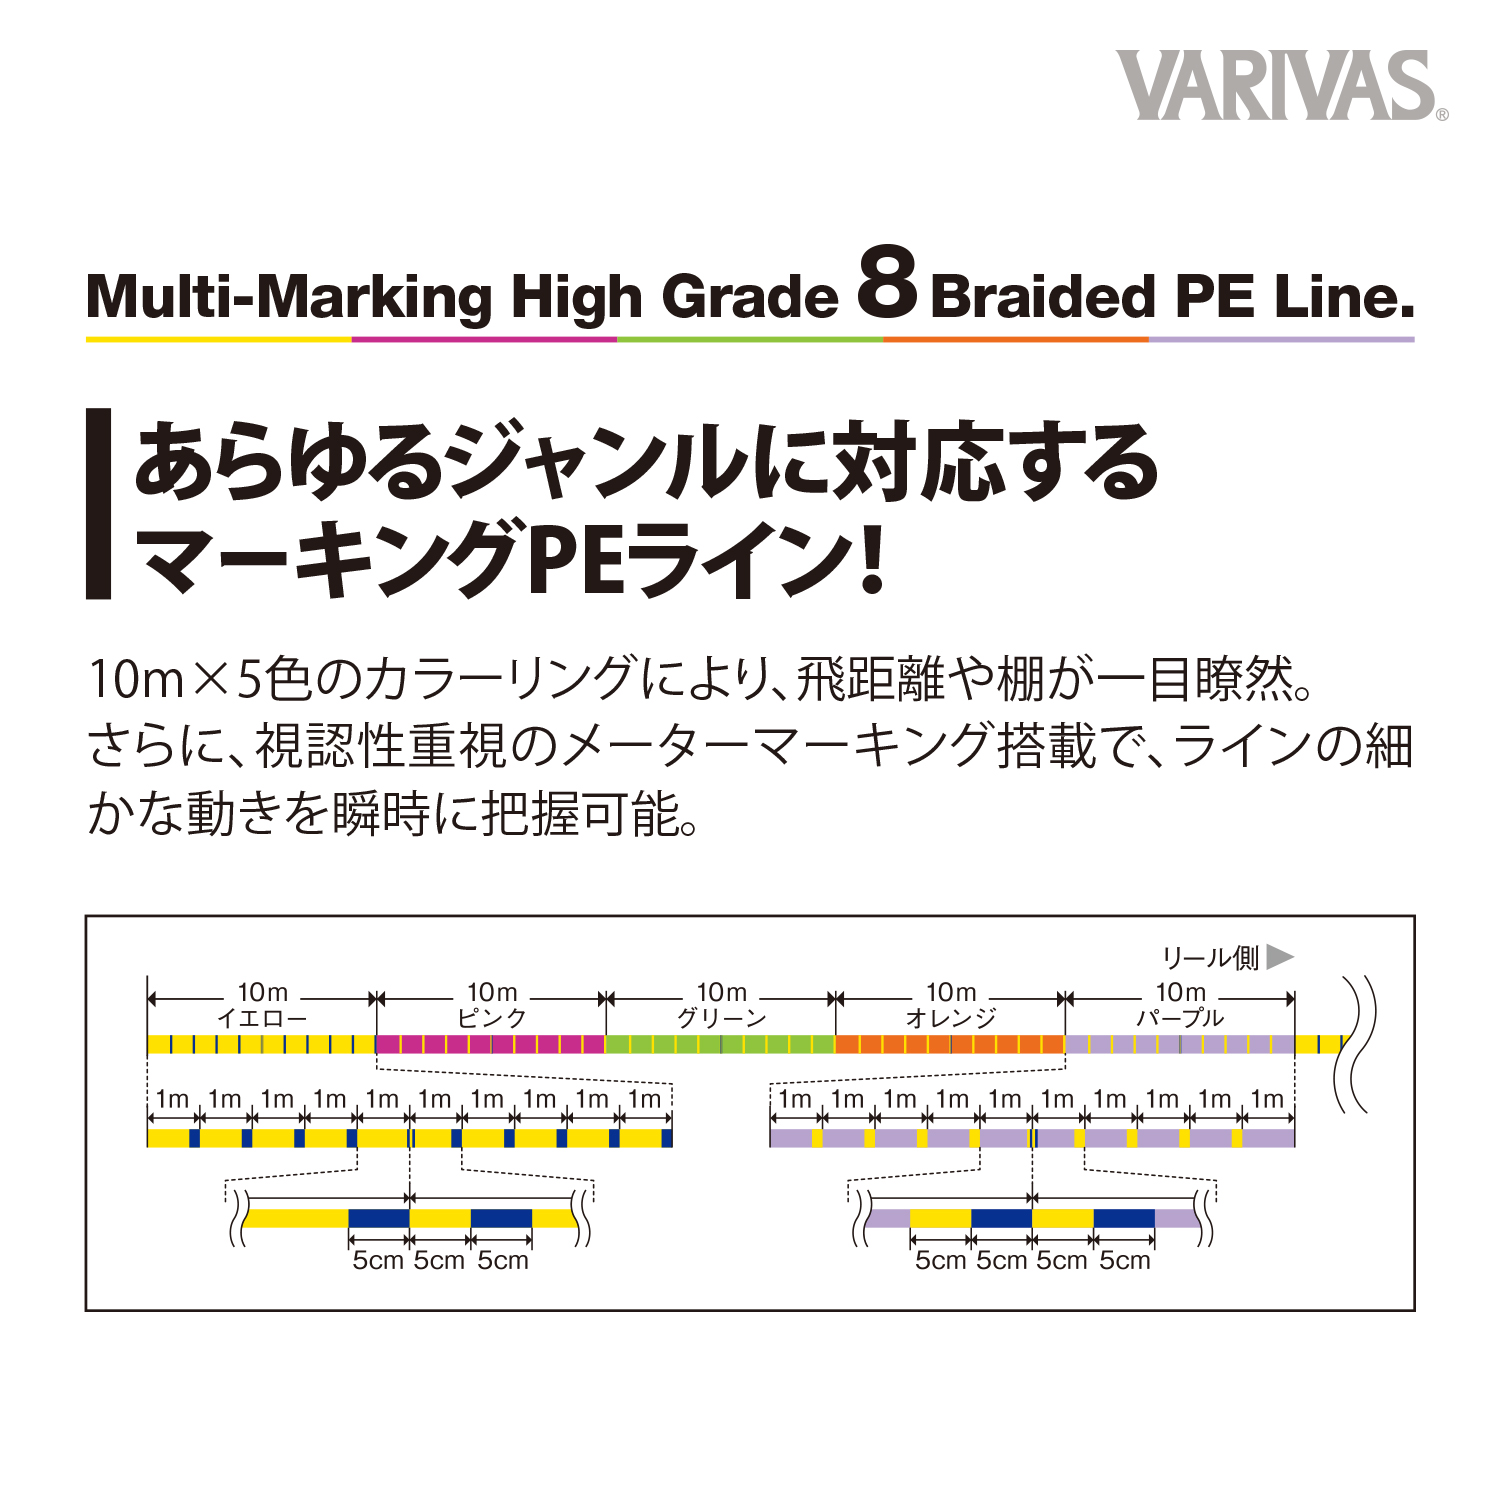 VARIVAS High Grade PE Marking Type2 X8 31lb 0.205mm 150m PE1.5